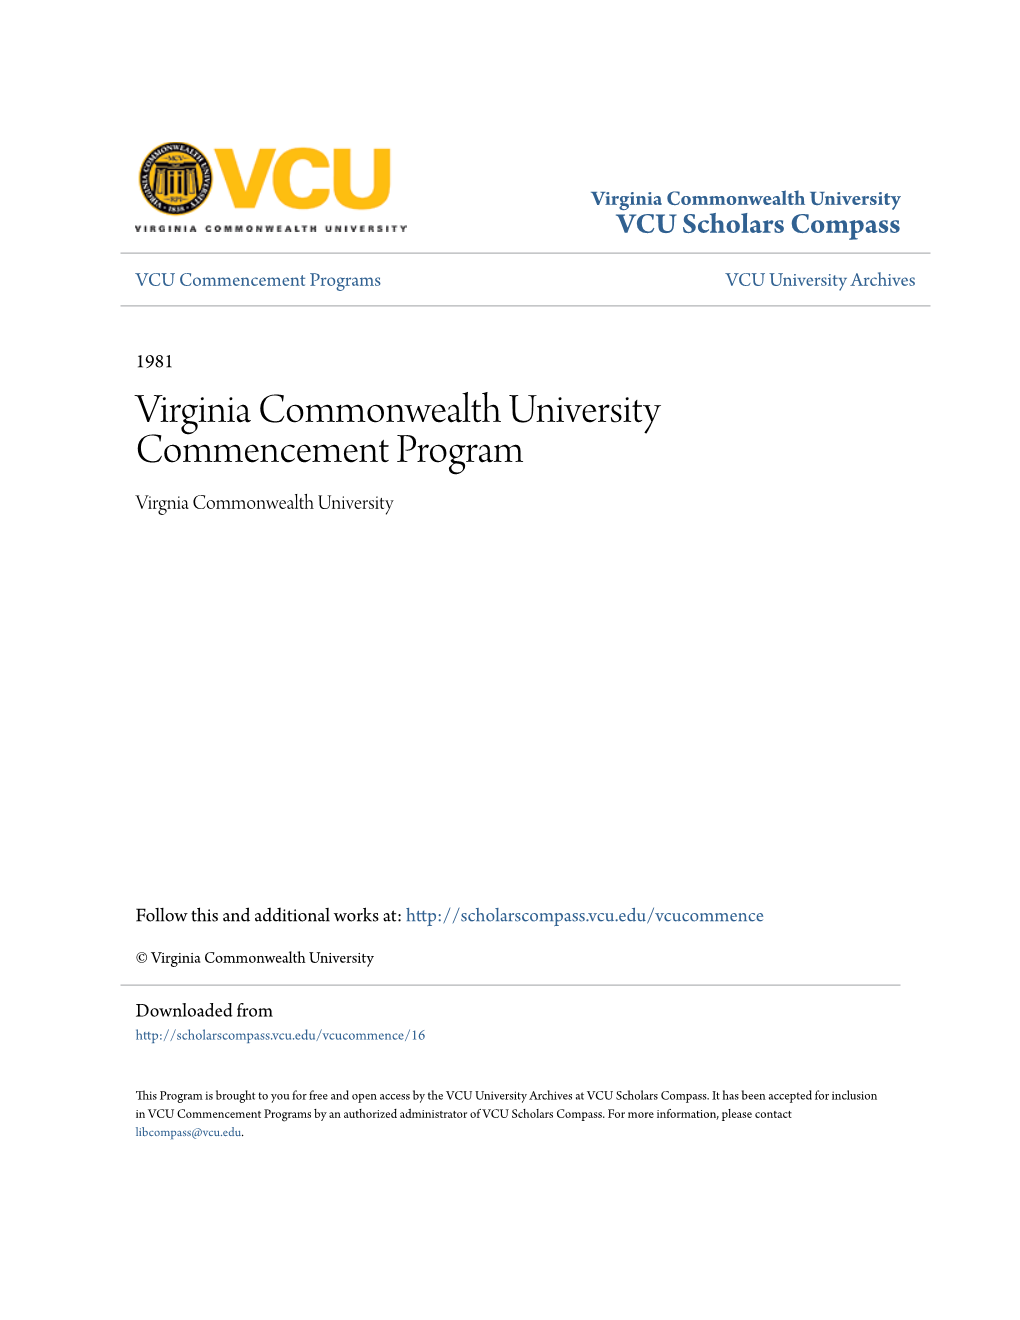 Virginia Commonwealth University Commencement Program Virgnia Commonwealth University